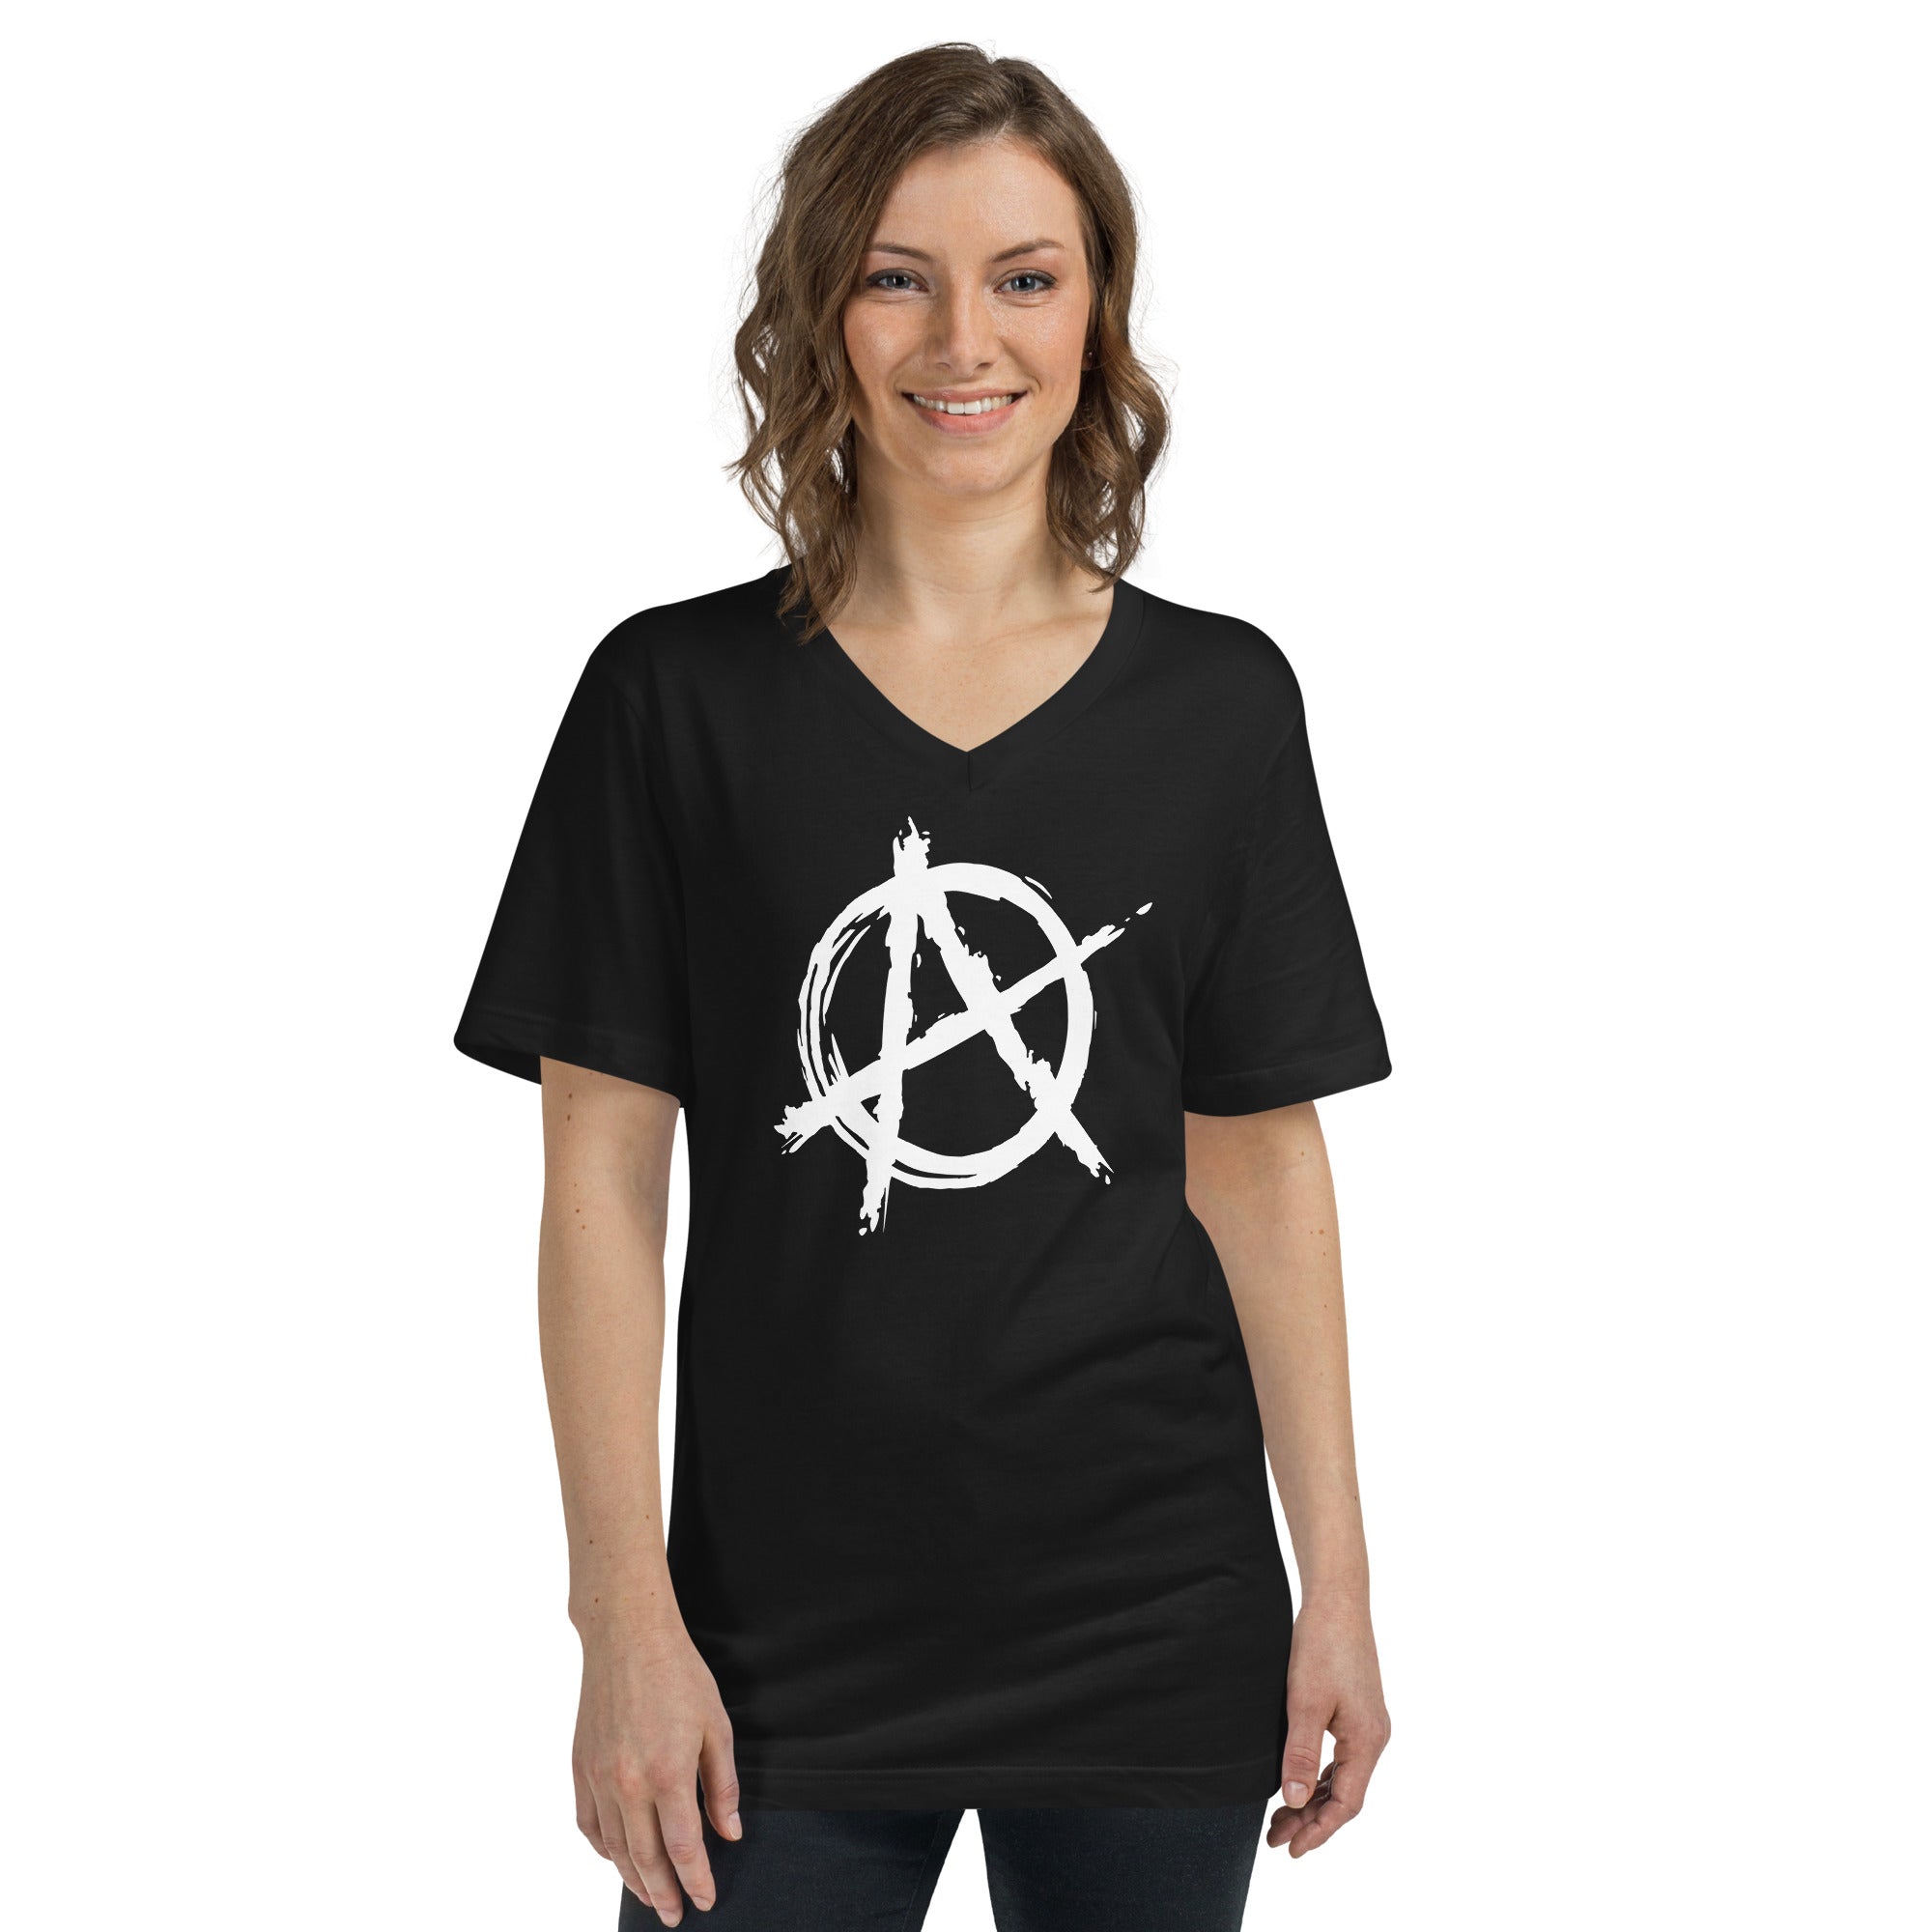 White Anarchy is Order Symbol Punk Rock Women’s Short Sleeve V-Neck T-Shirt